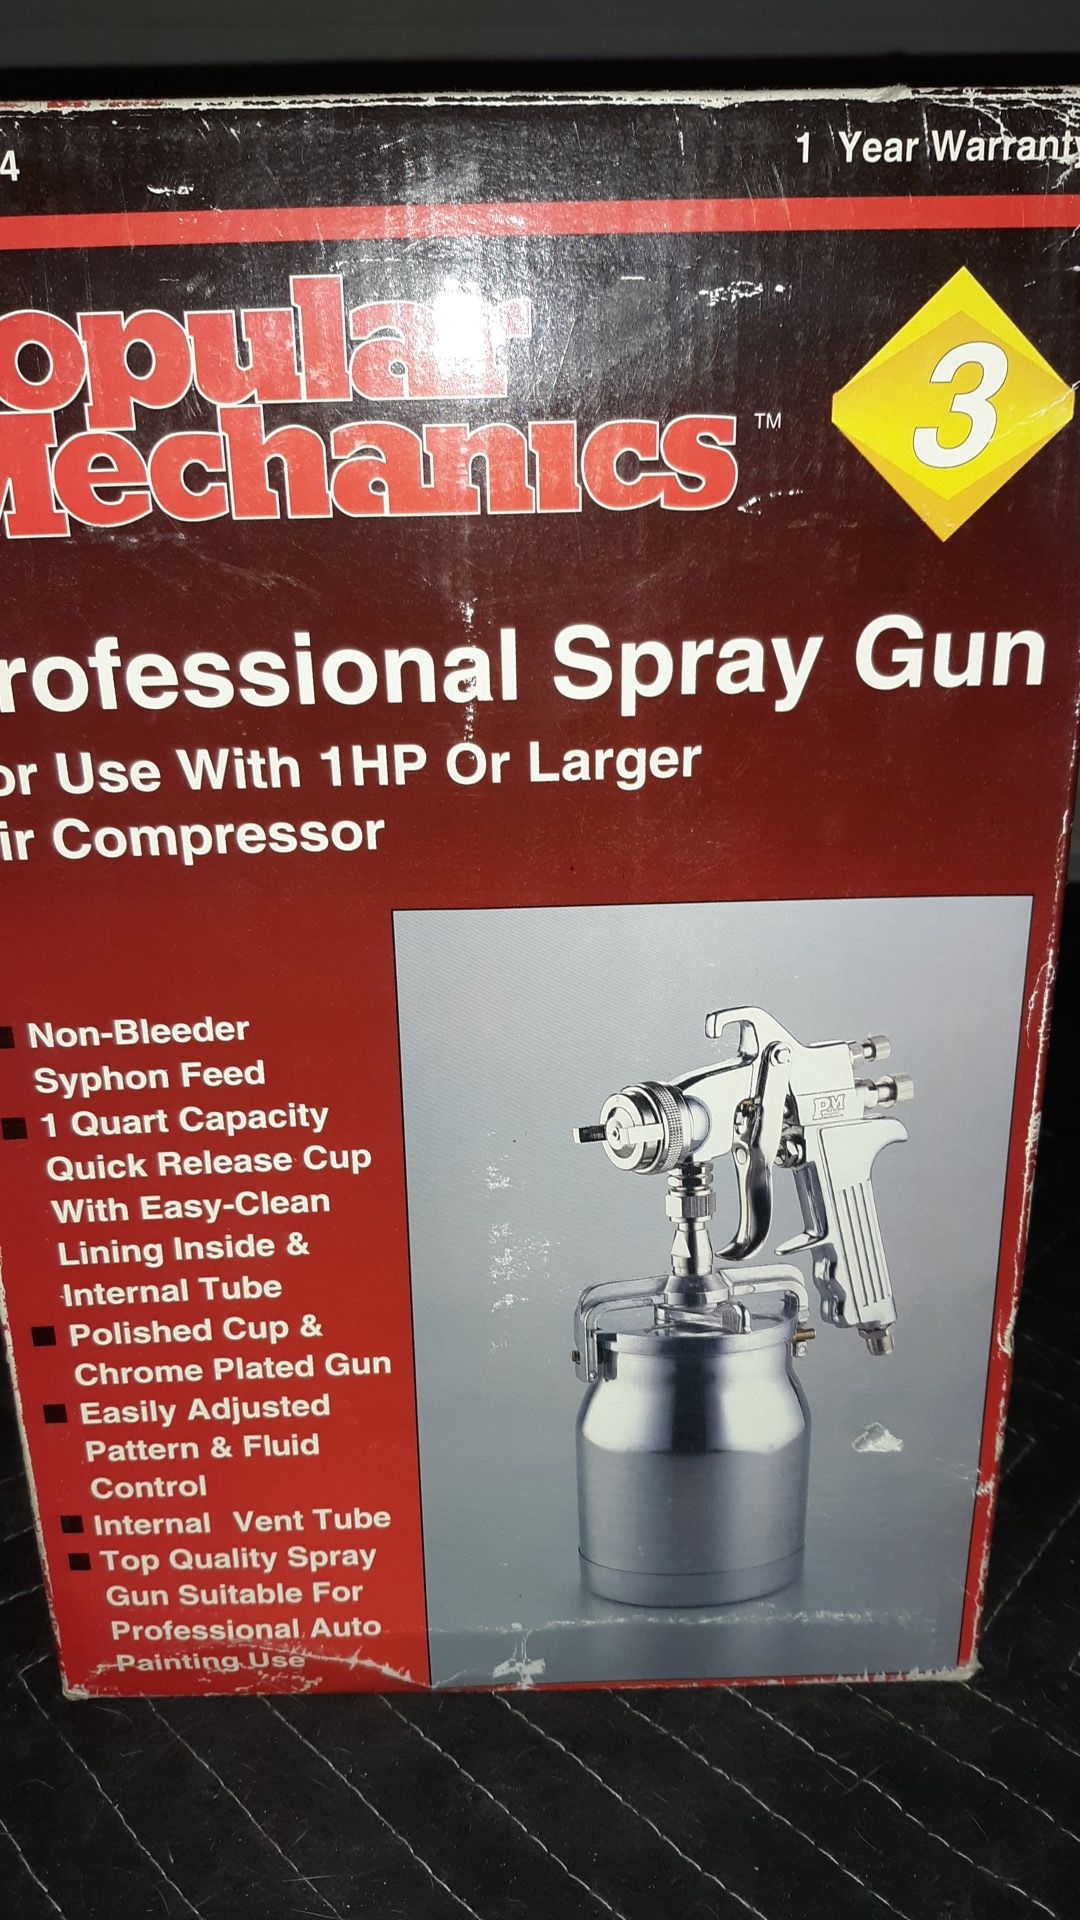 Popular mechanics professional spray gun